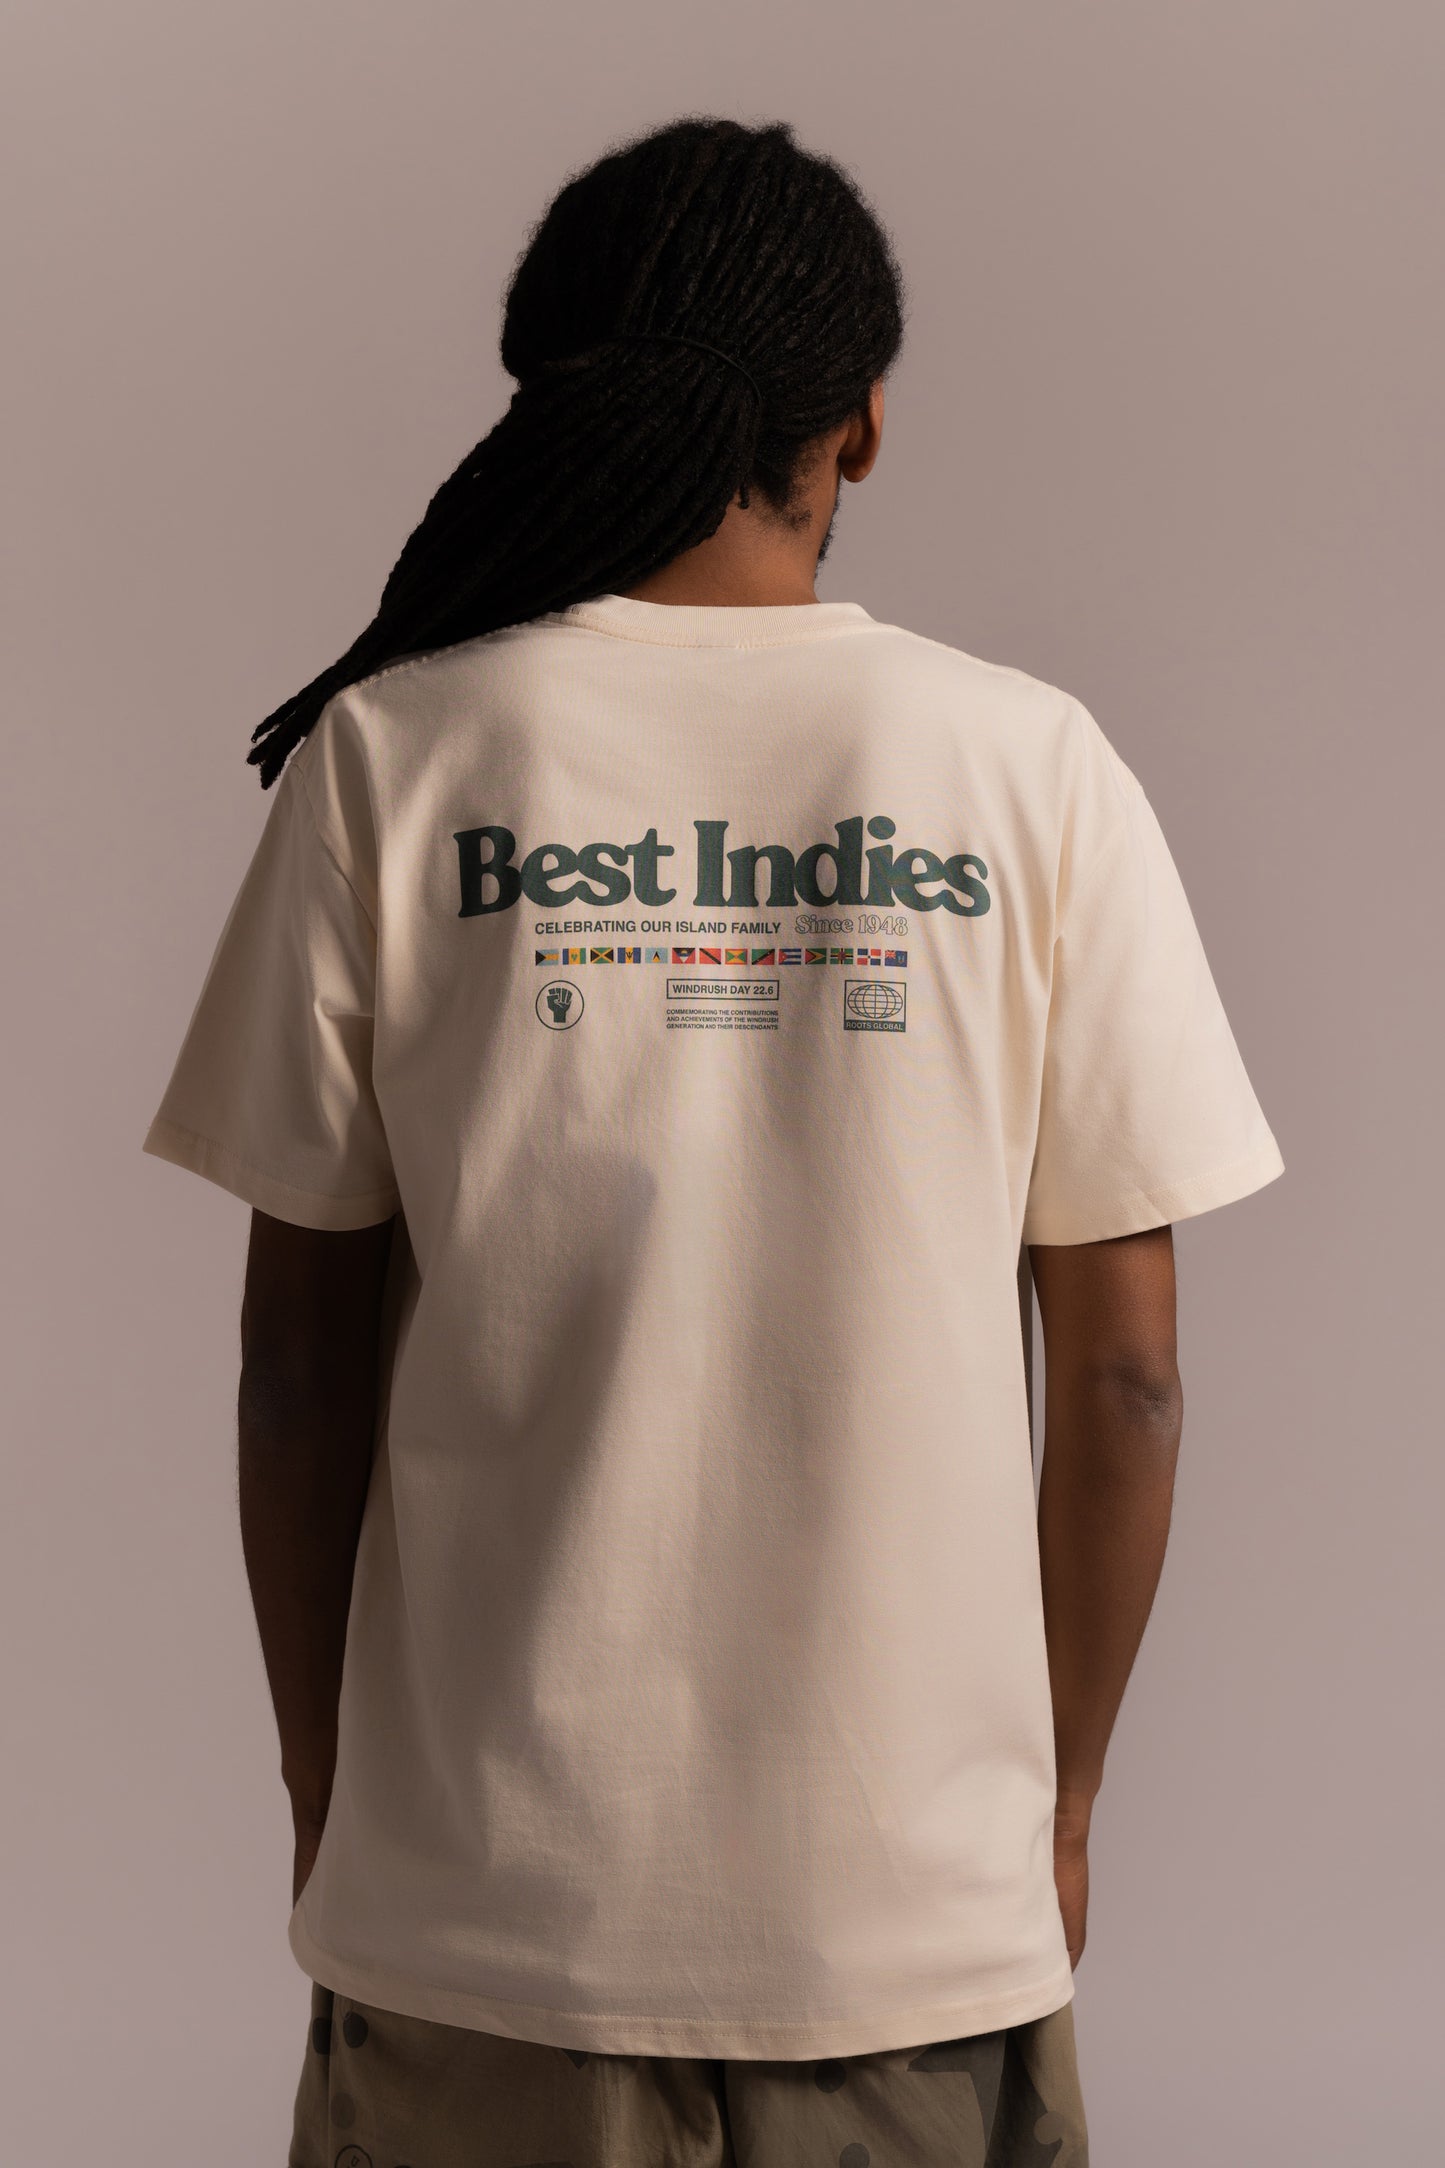 Best Indies - Ecru T-Shirt